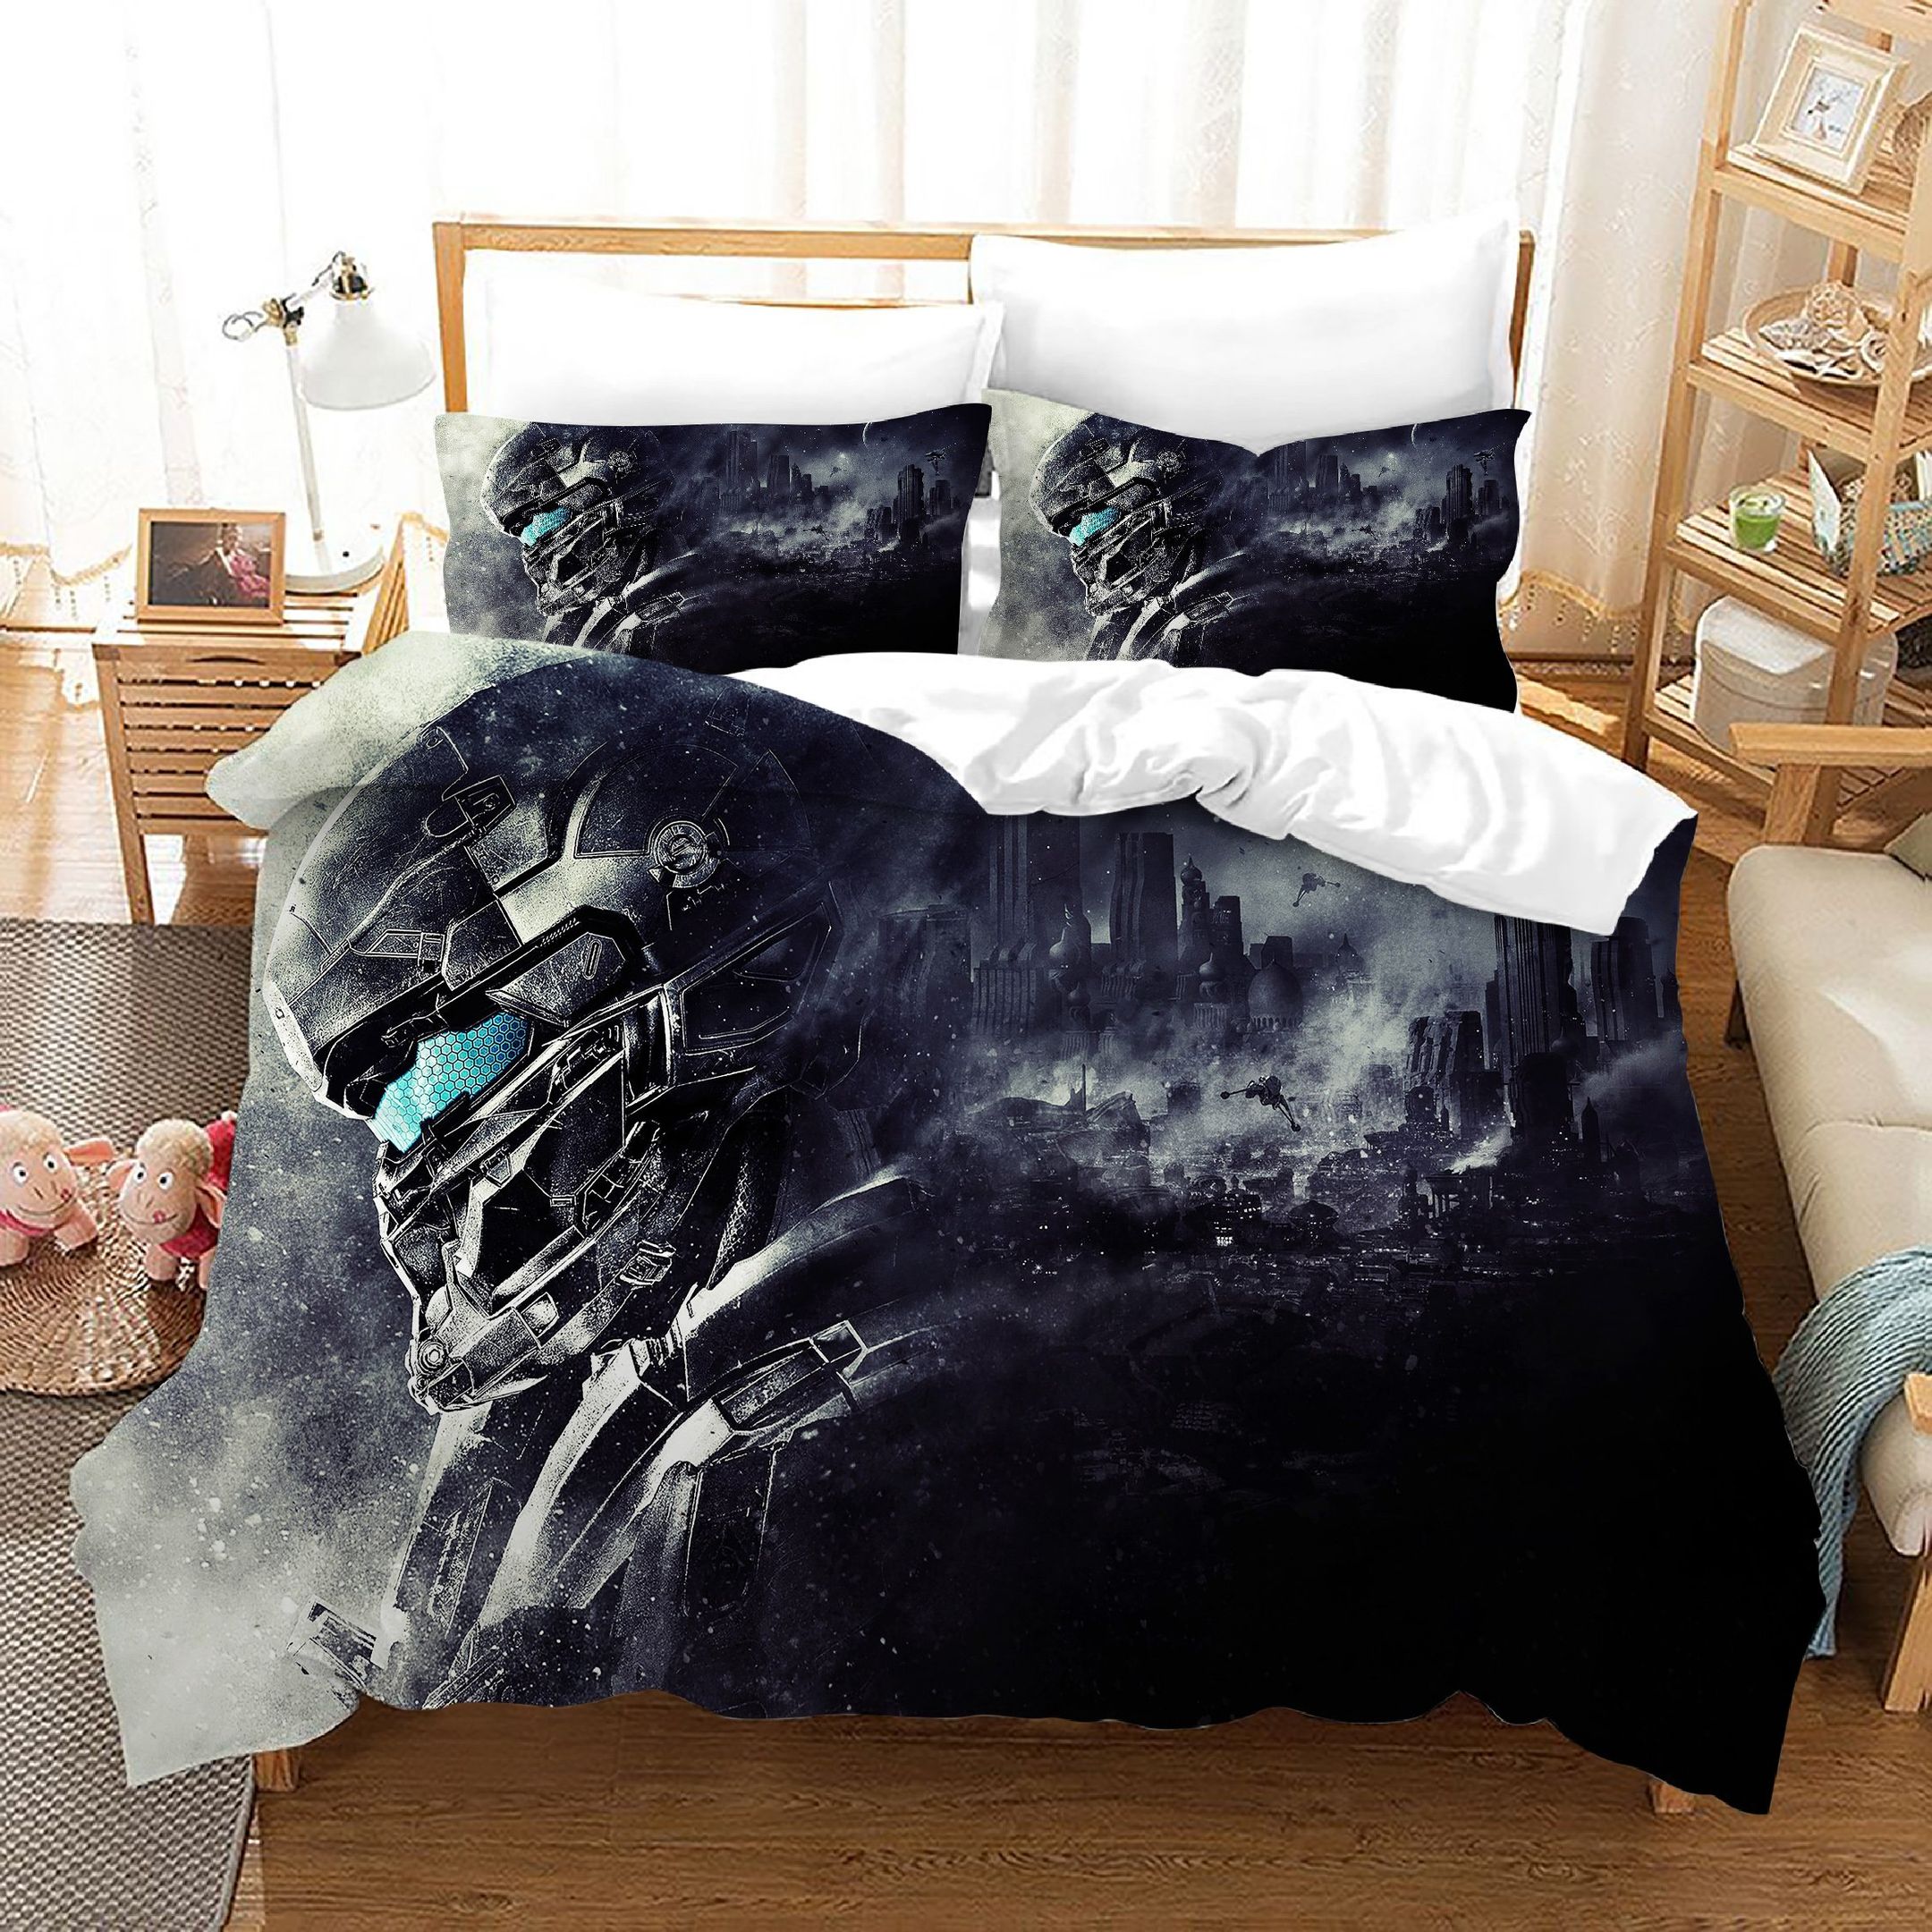 Halo 5 Guardians 21 Duvet Cover Quilt Cover Pillowcase Bedding